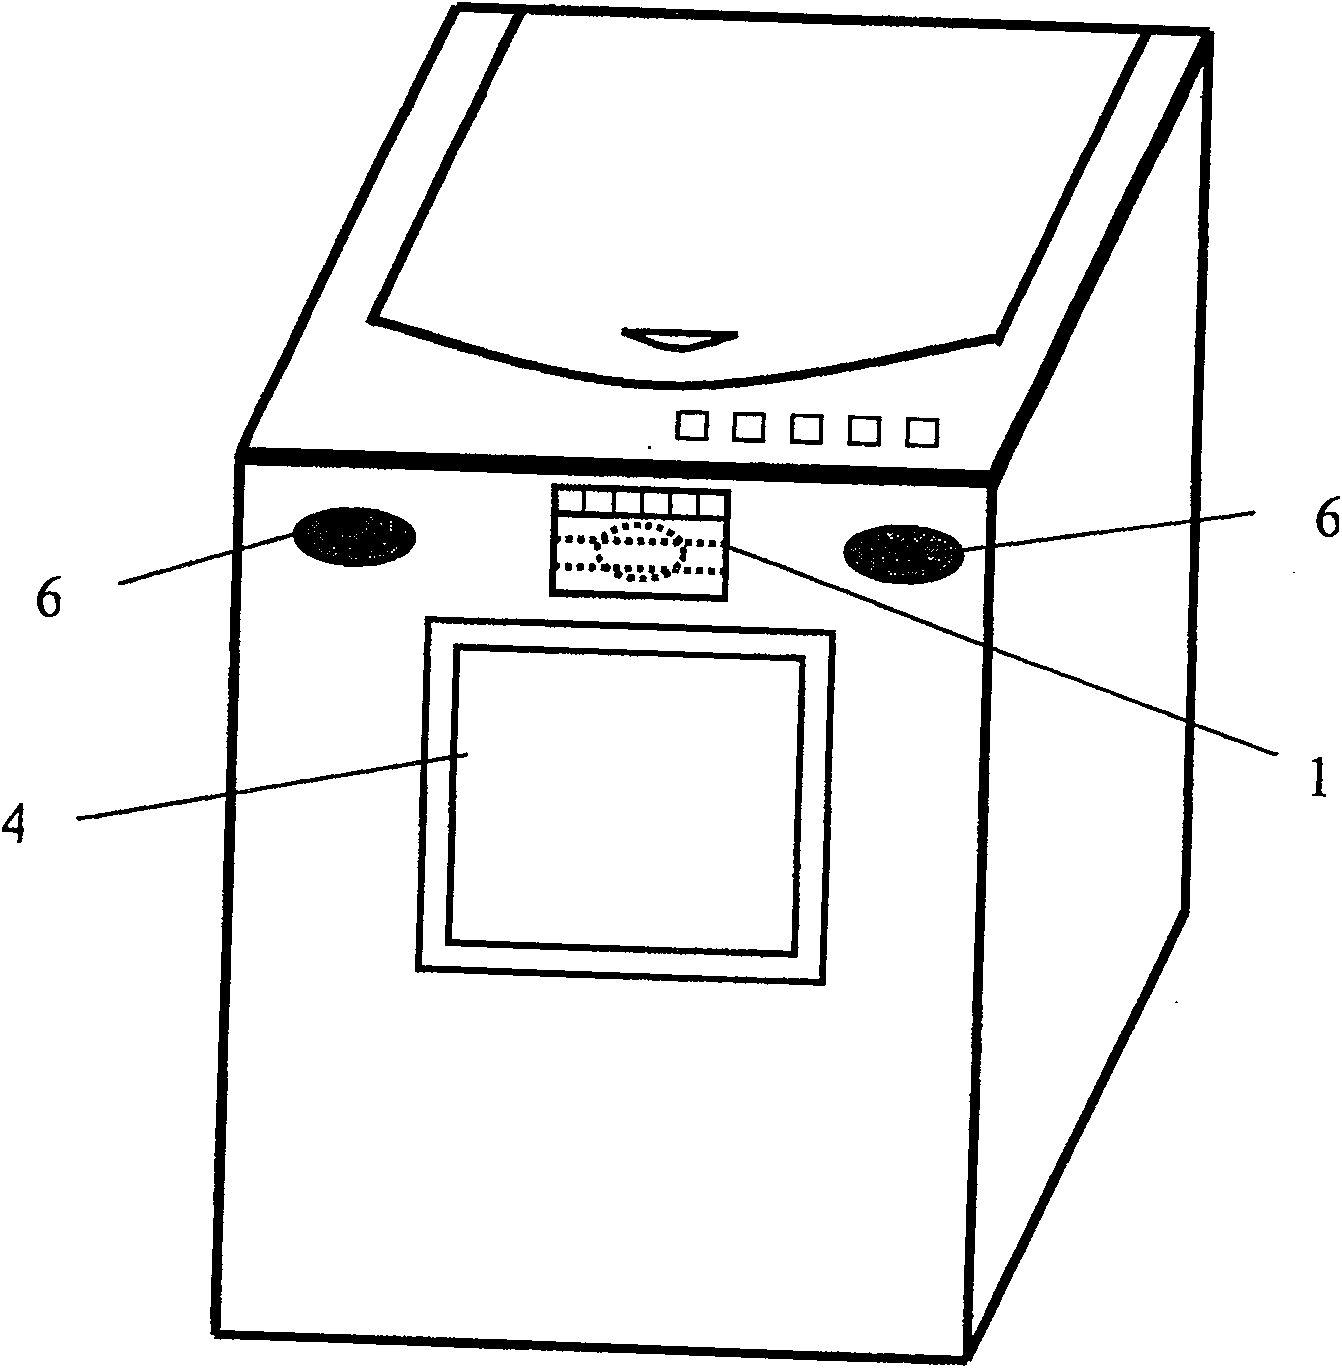 Multimedia device for self-service public washing machine